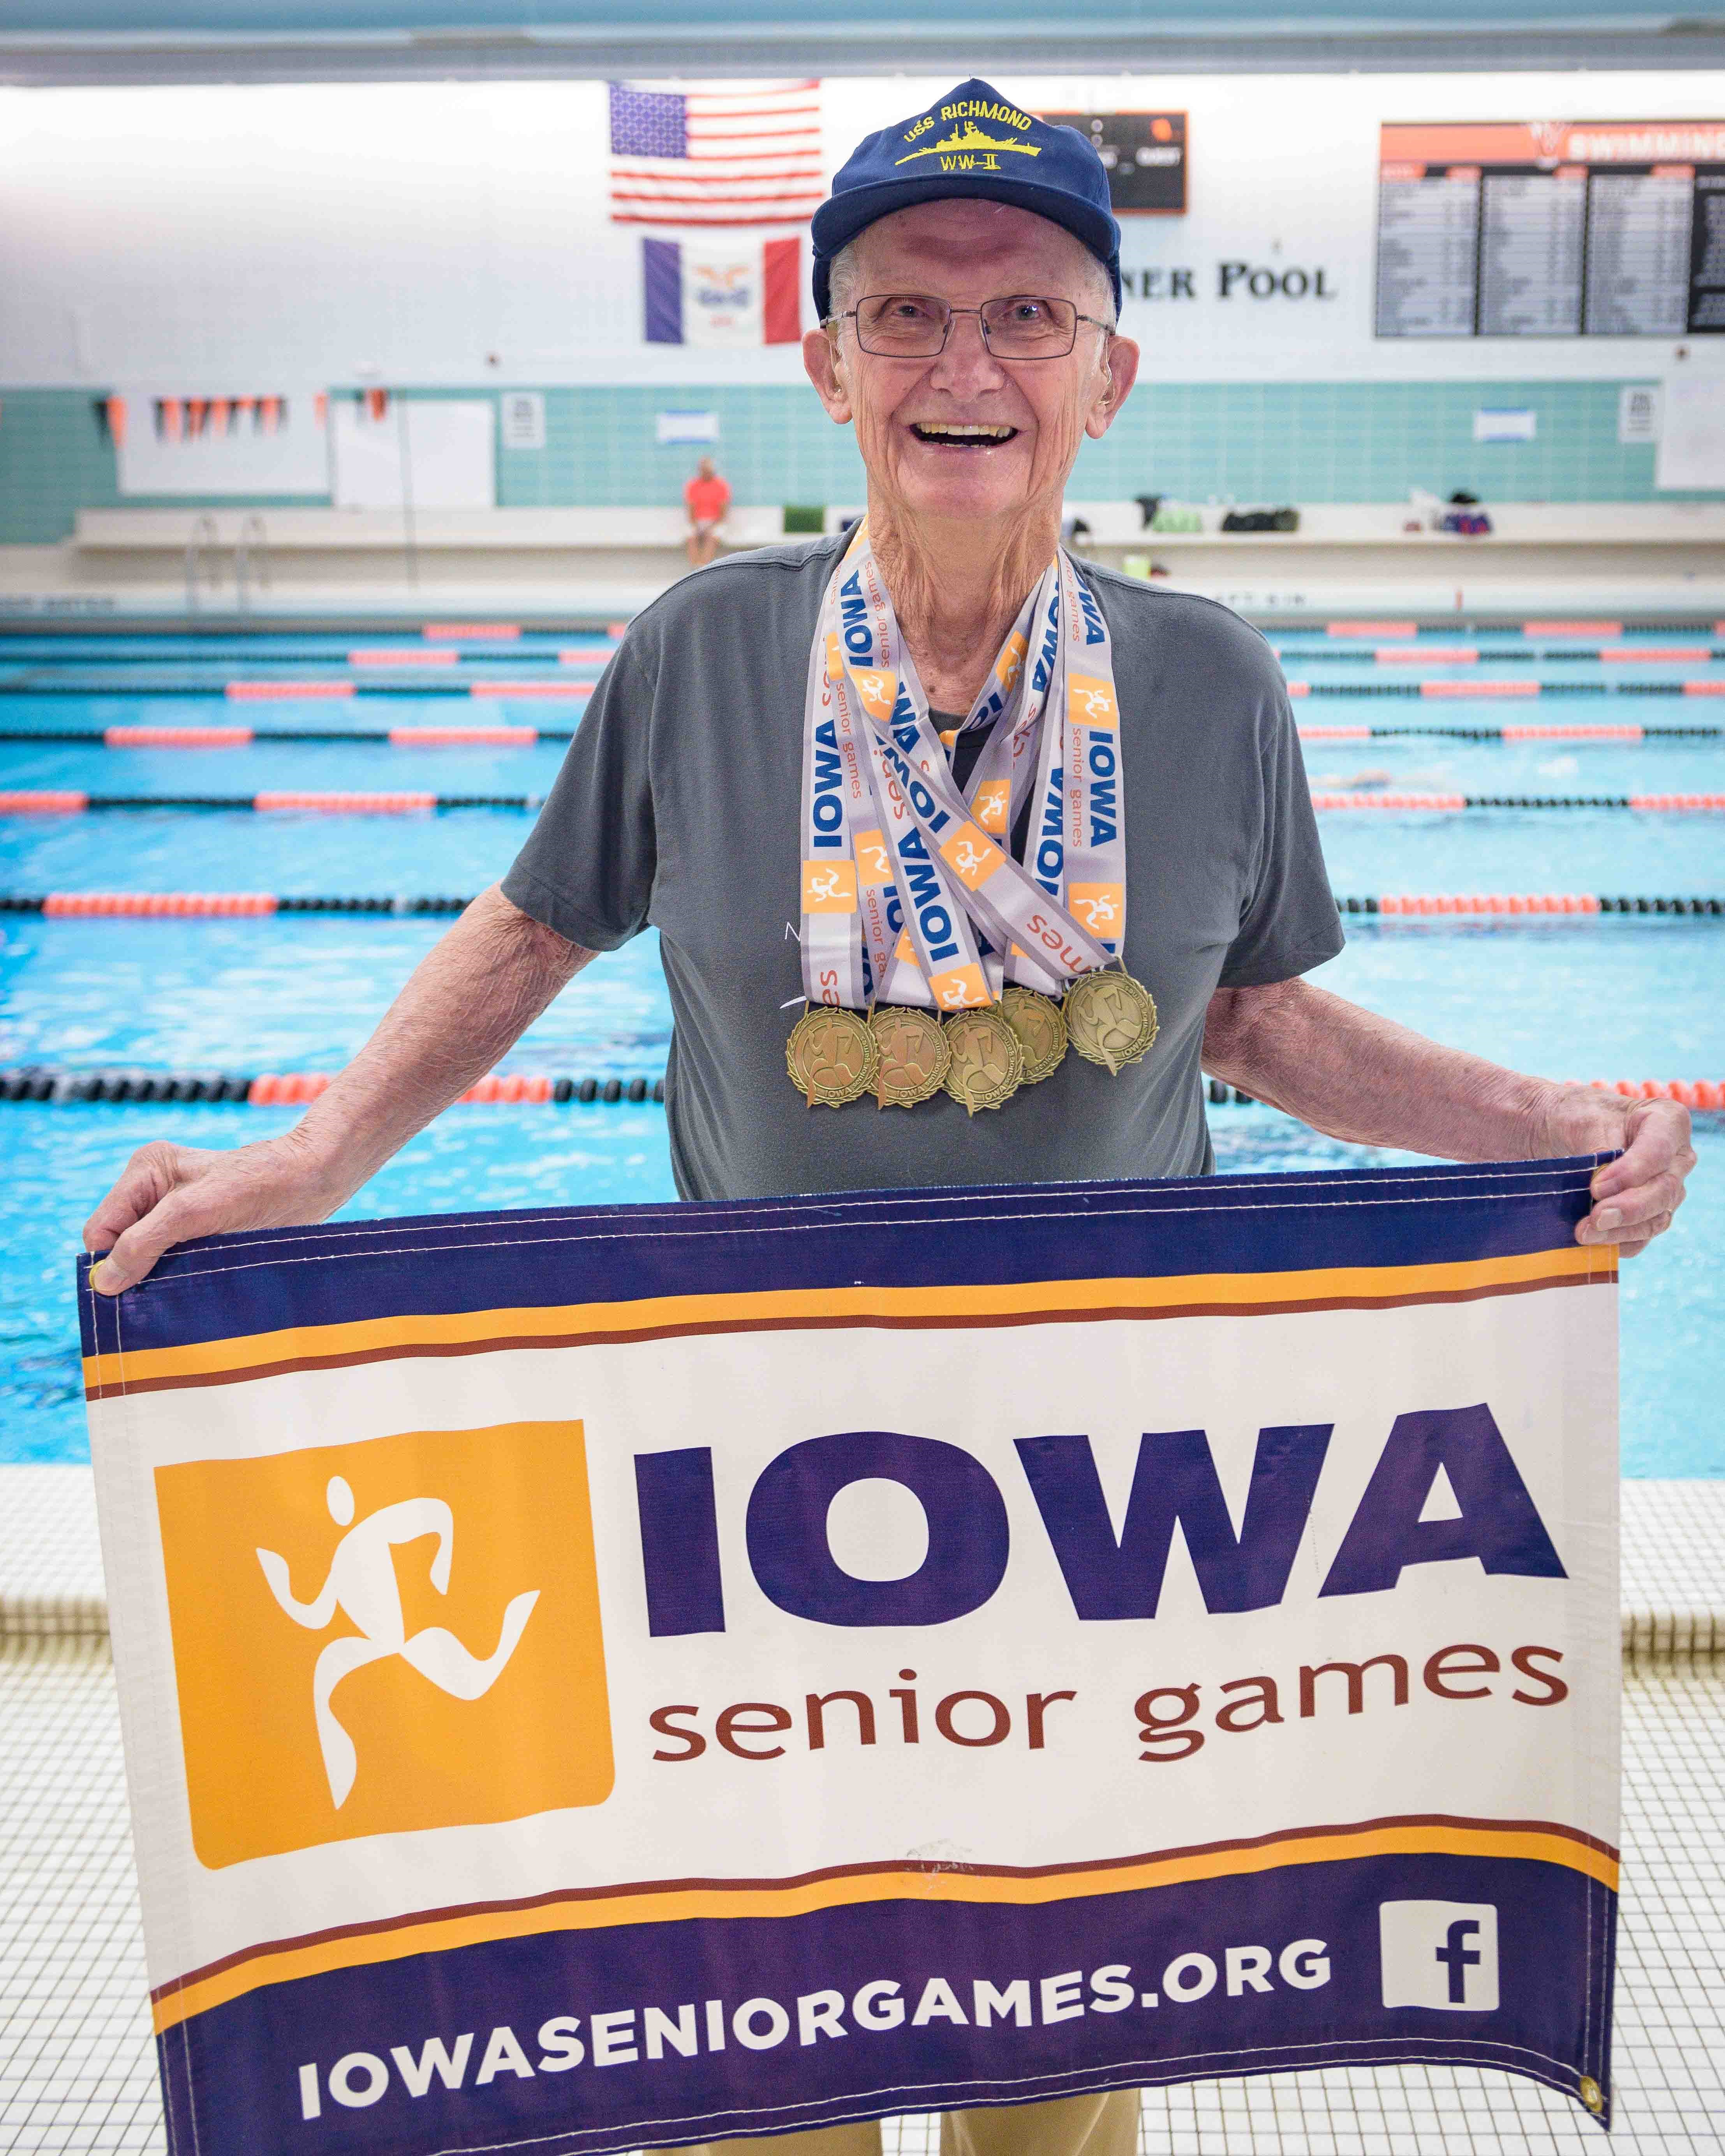 Bob Iowa Senior Games